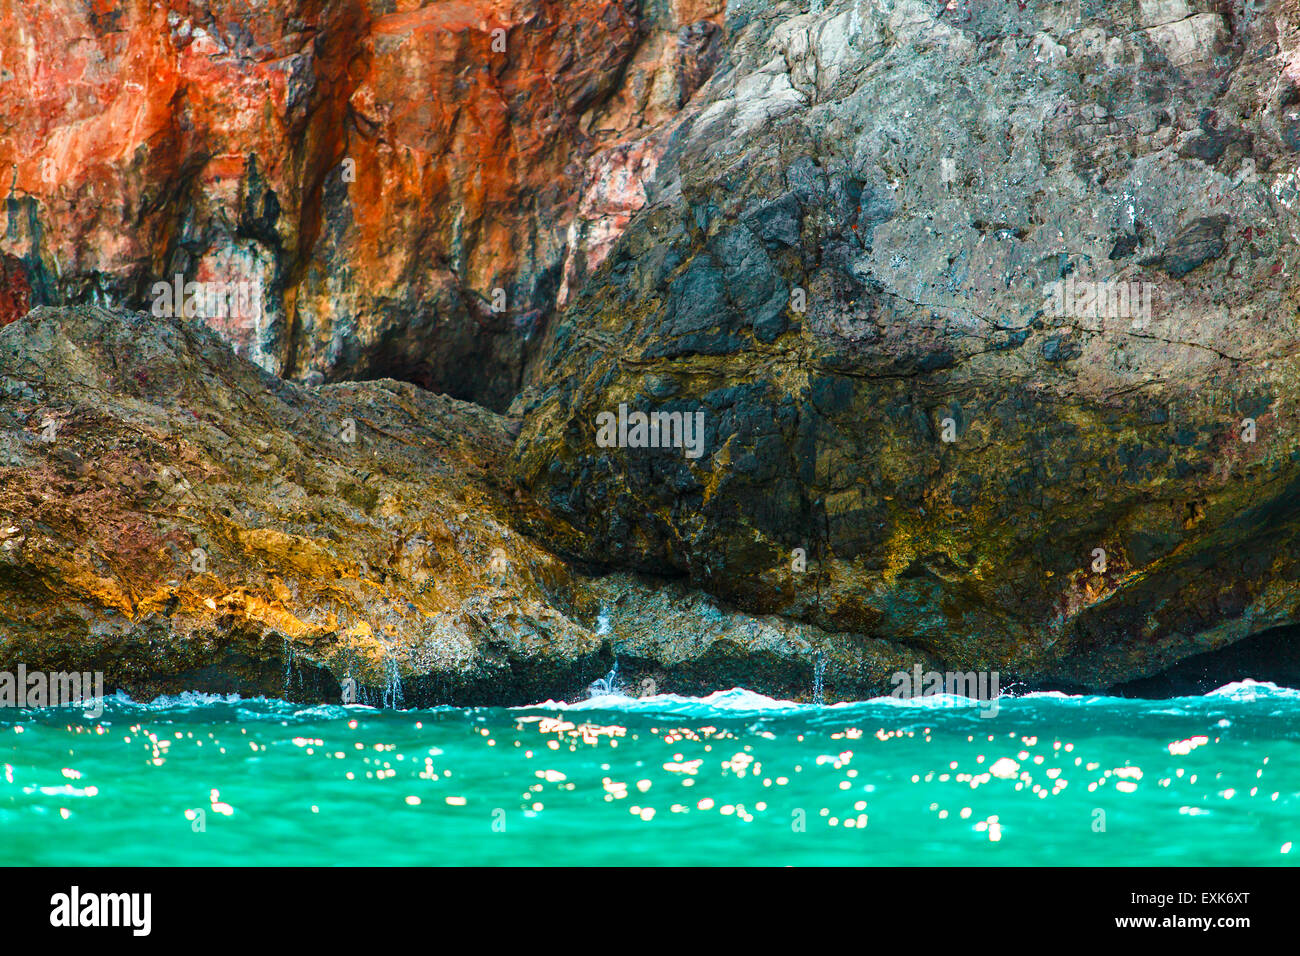 Rock-Tropeninsel mit grünen Steinen am tiefblauen Meer Philippinen Boracay Sommerinsel Stockfoto